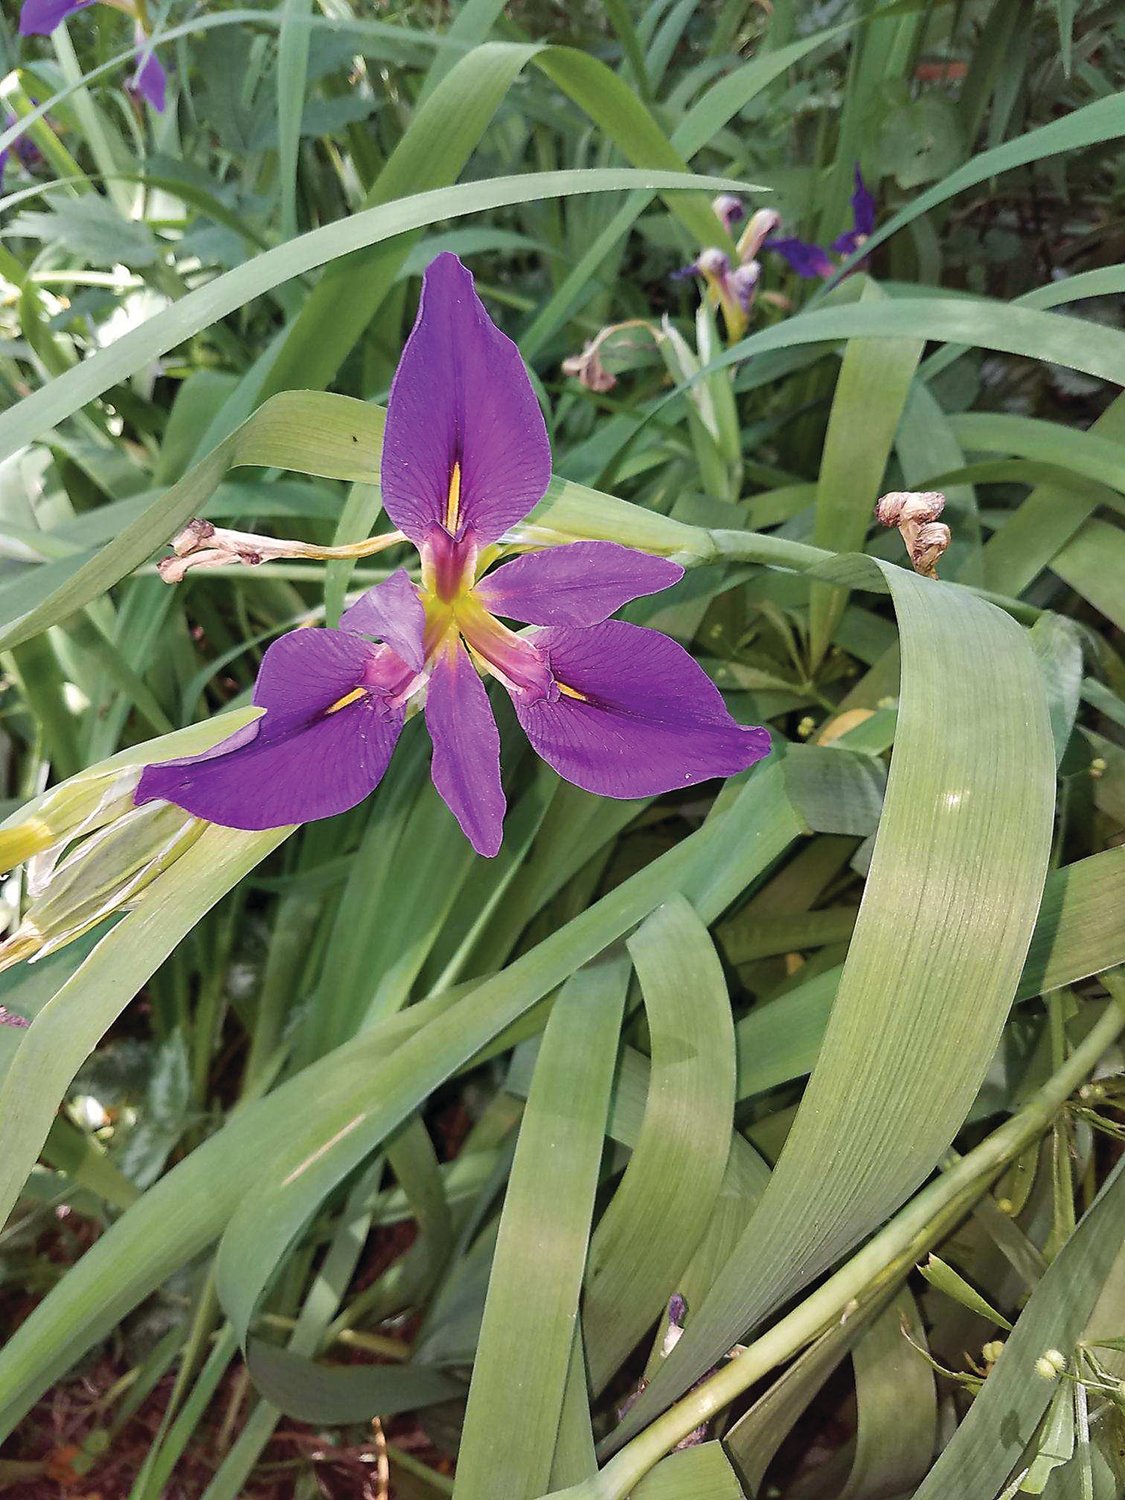 Iris in the Bowman garden.